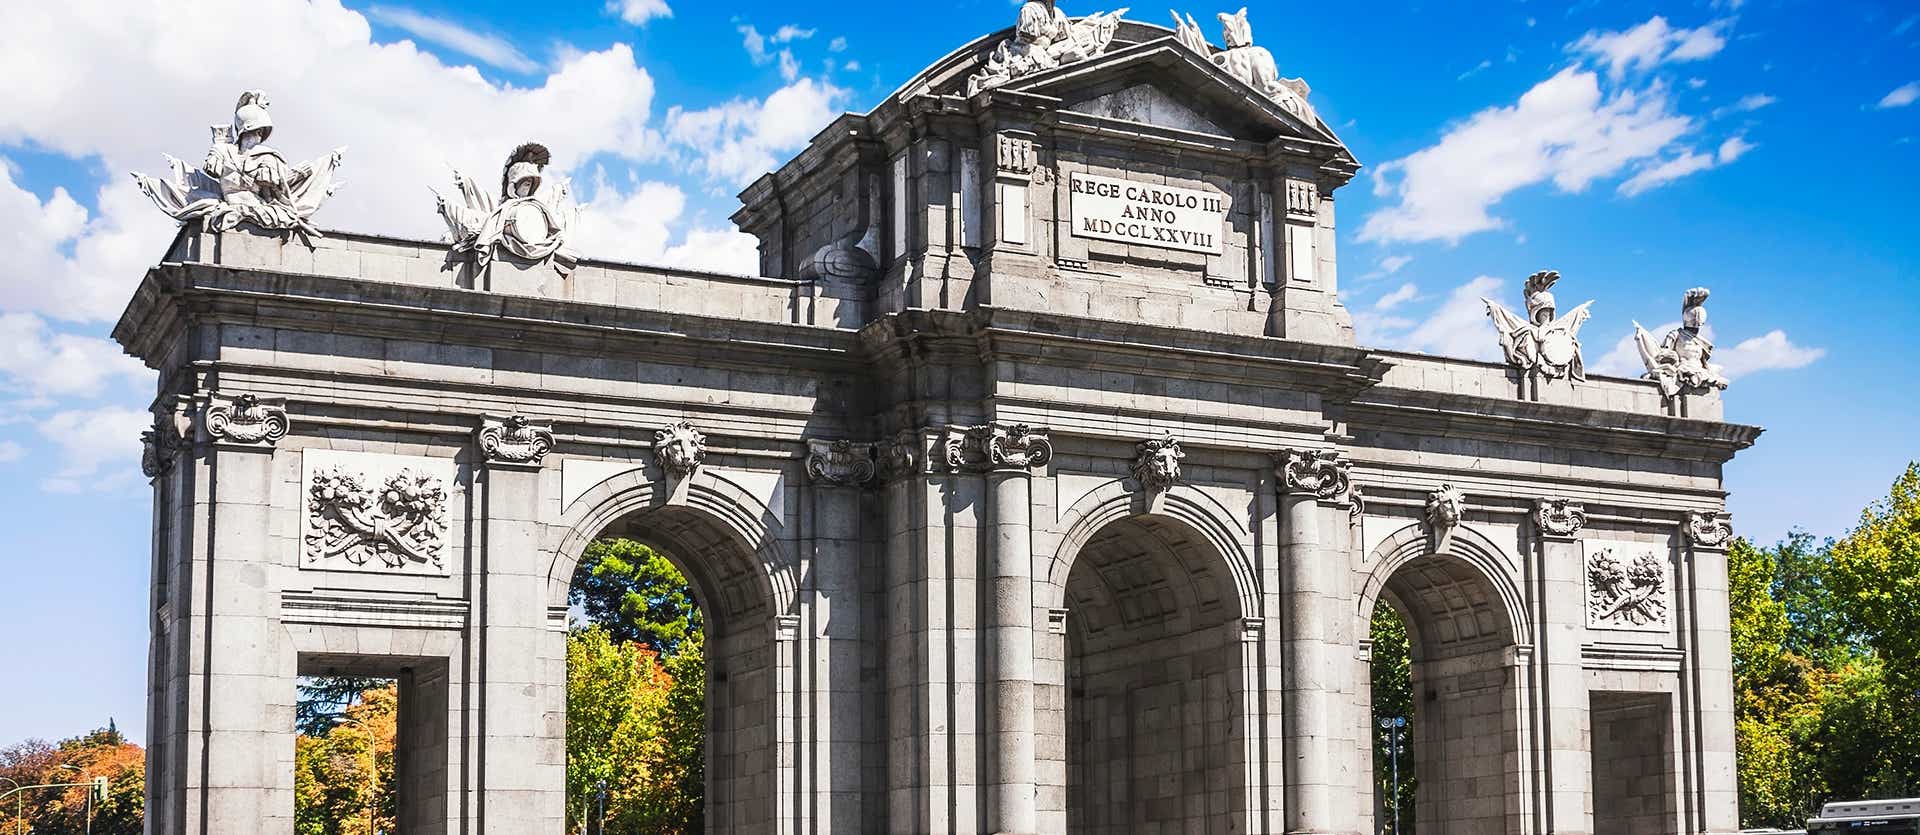 Puerta de Alcala <span class="iconos separador"></span> Madrid